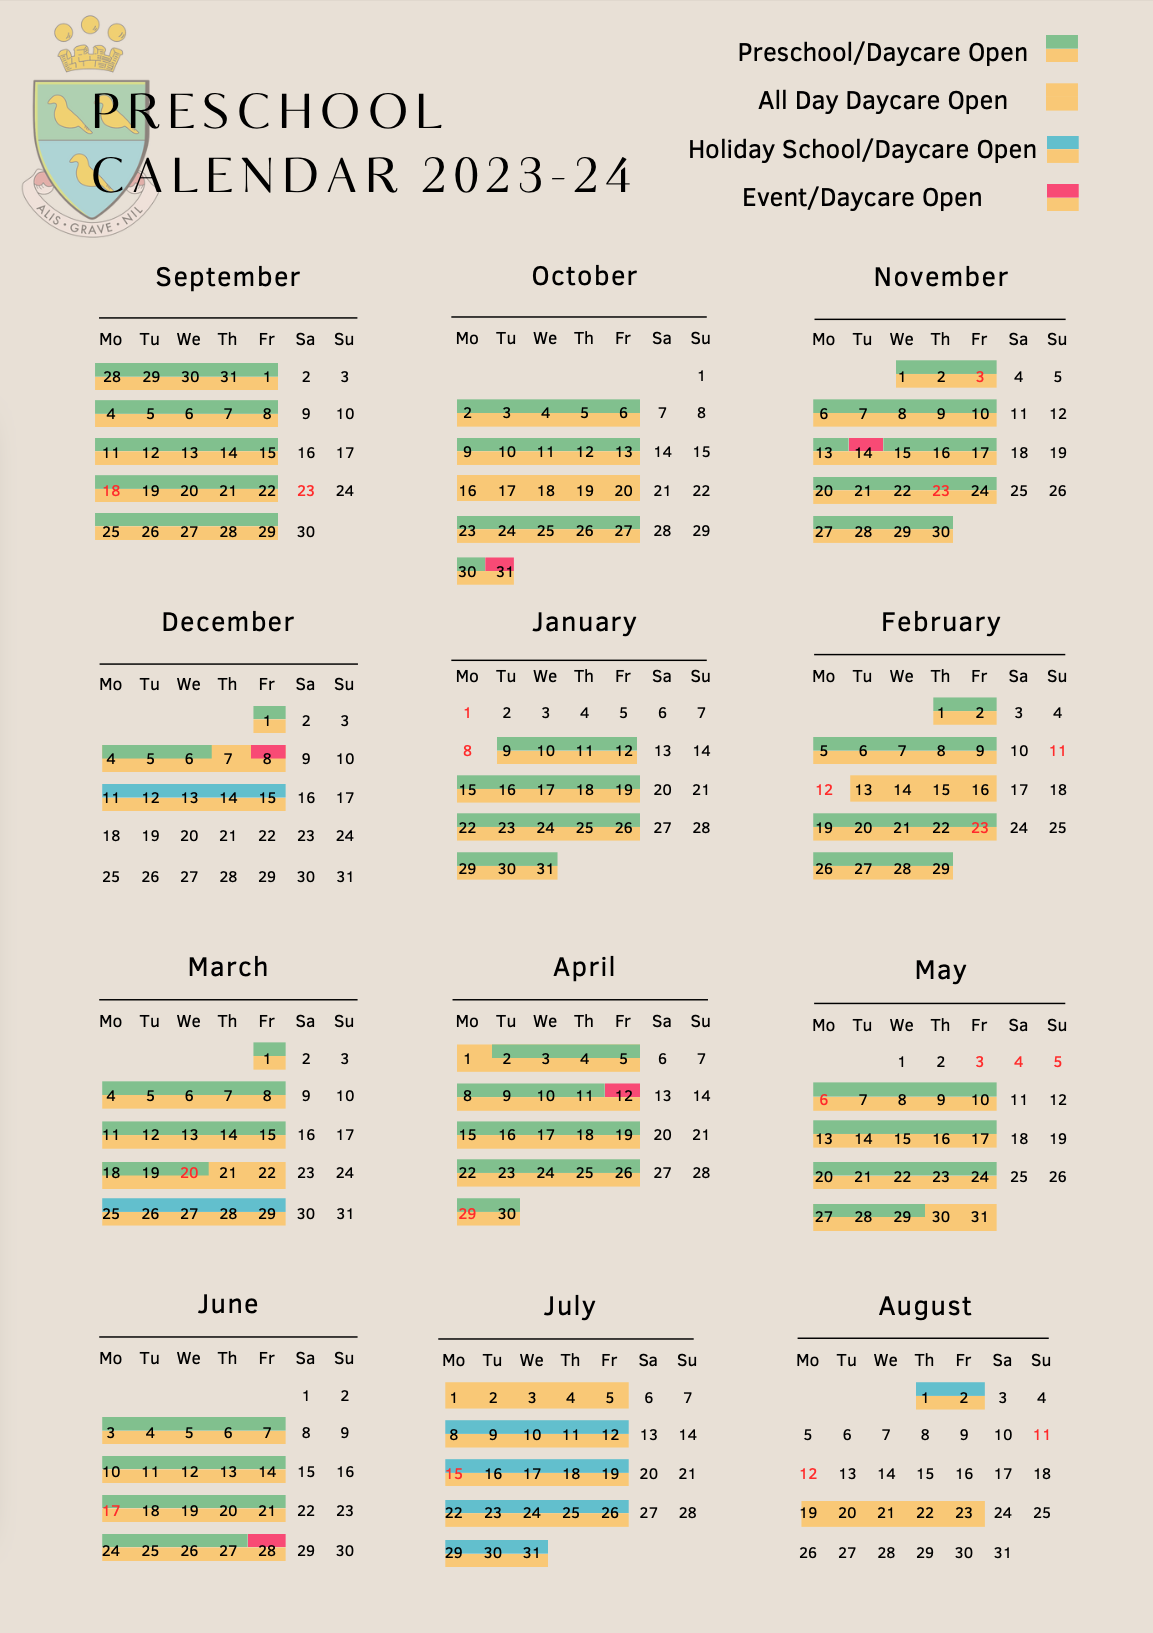 clarence-tokyo-preschool-calendar-2023-24